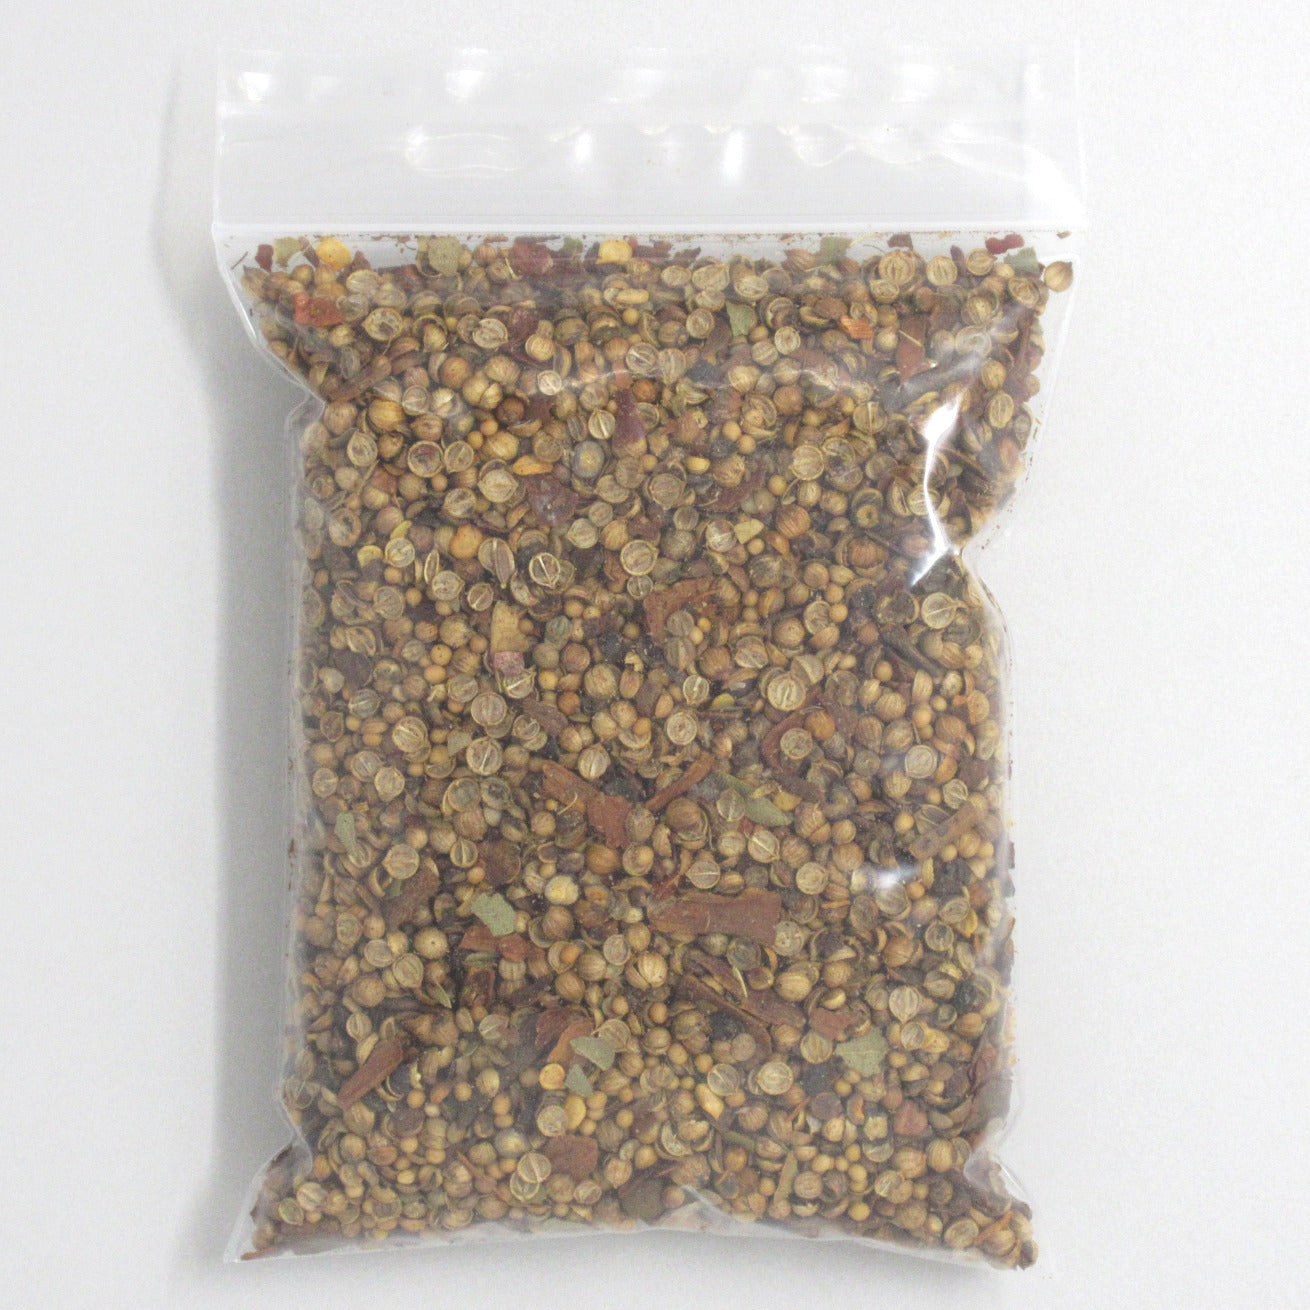 Flour Barrel product image - Pickling Spice